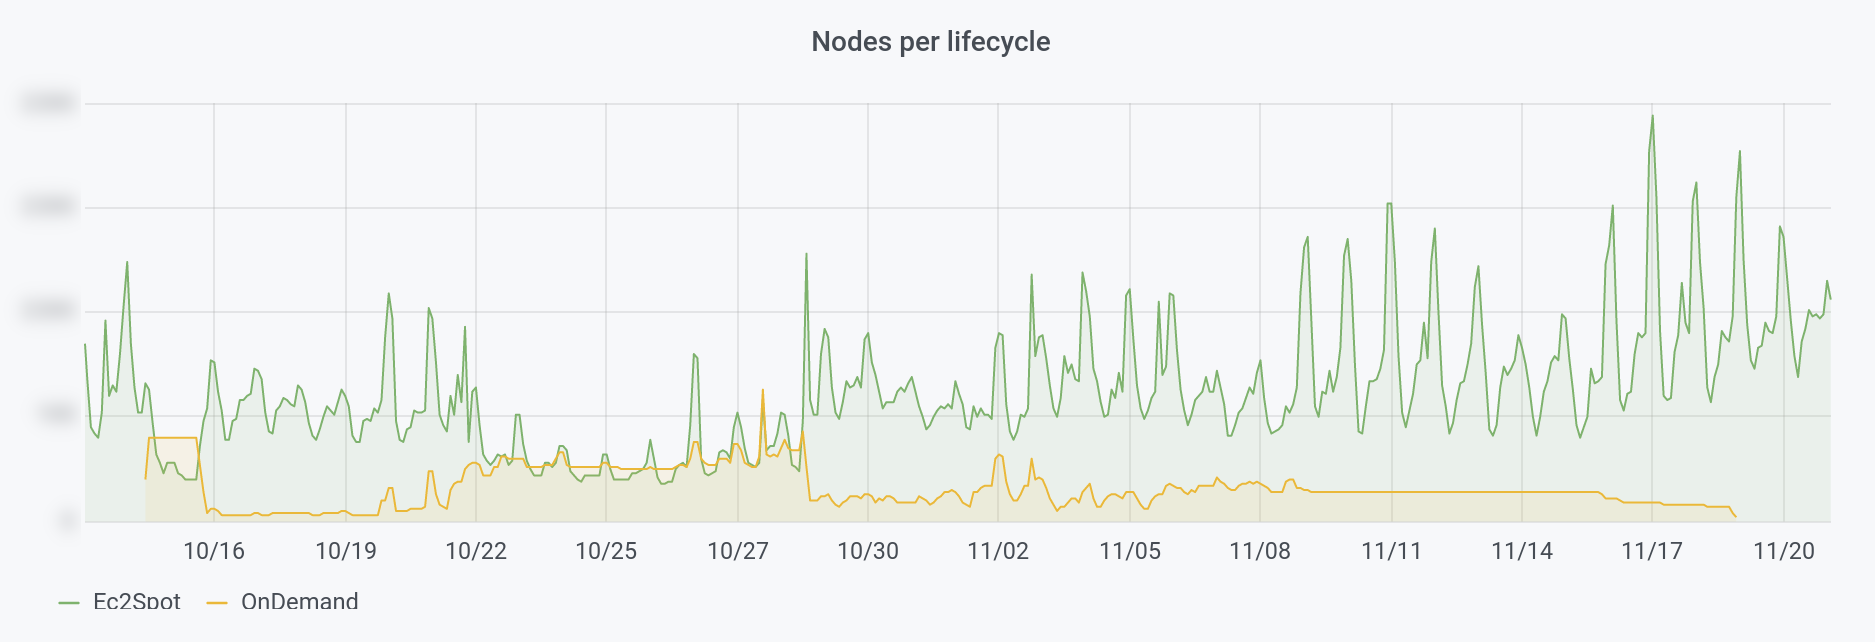 nodes per lifecycle